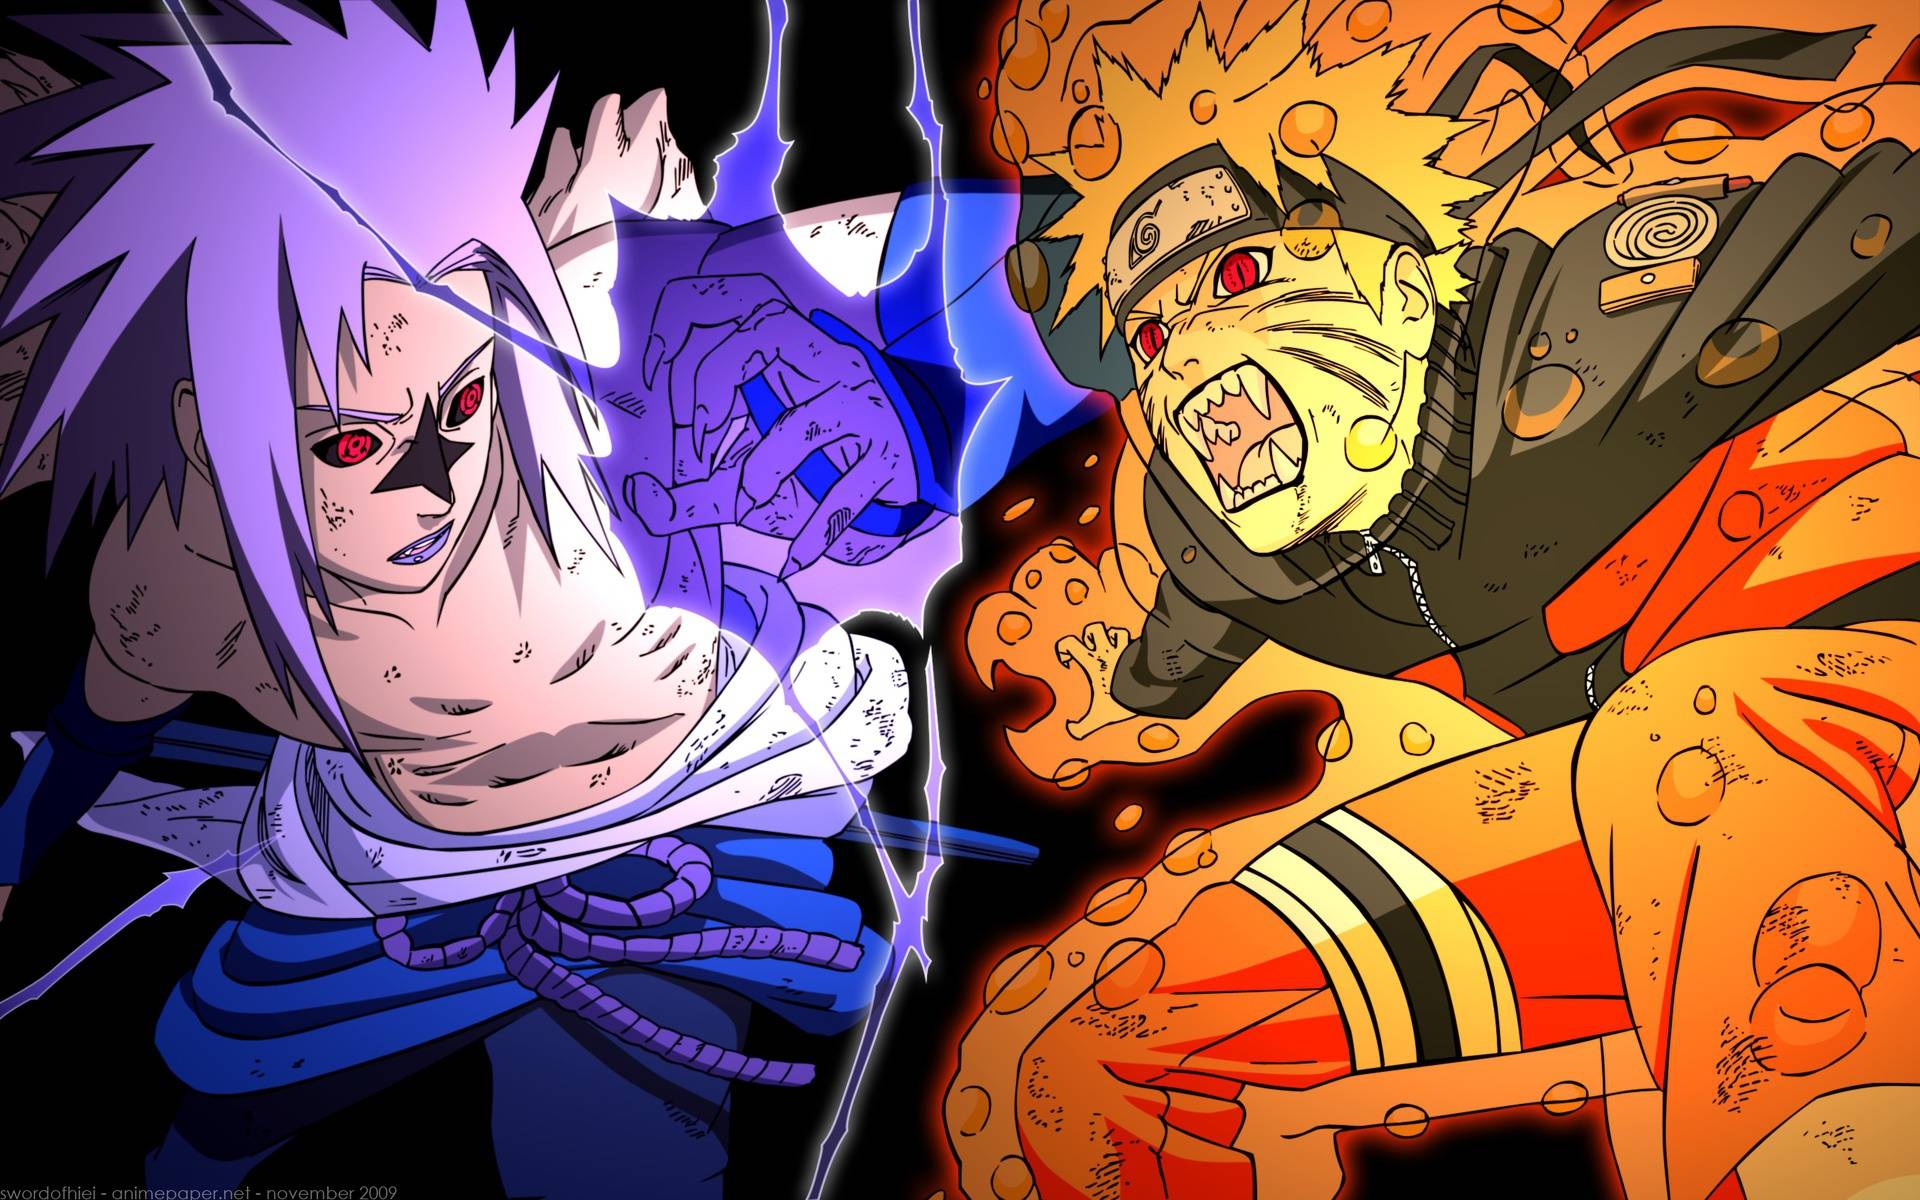 Naruto Illustration In Naruto Uzumaki Wallpapers